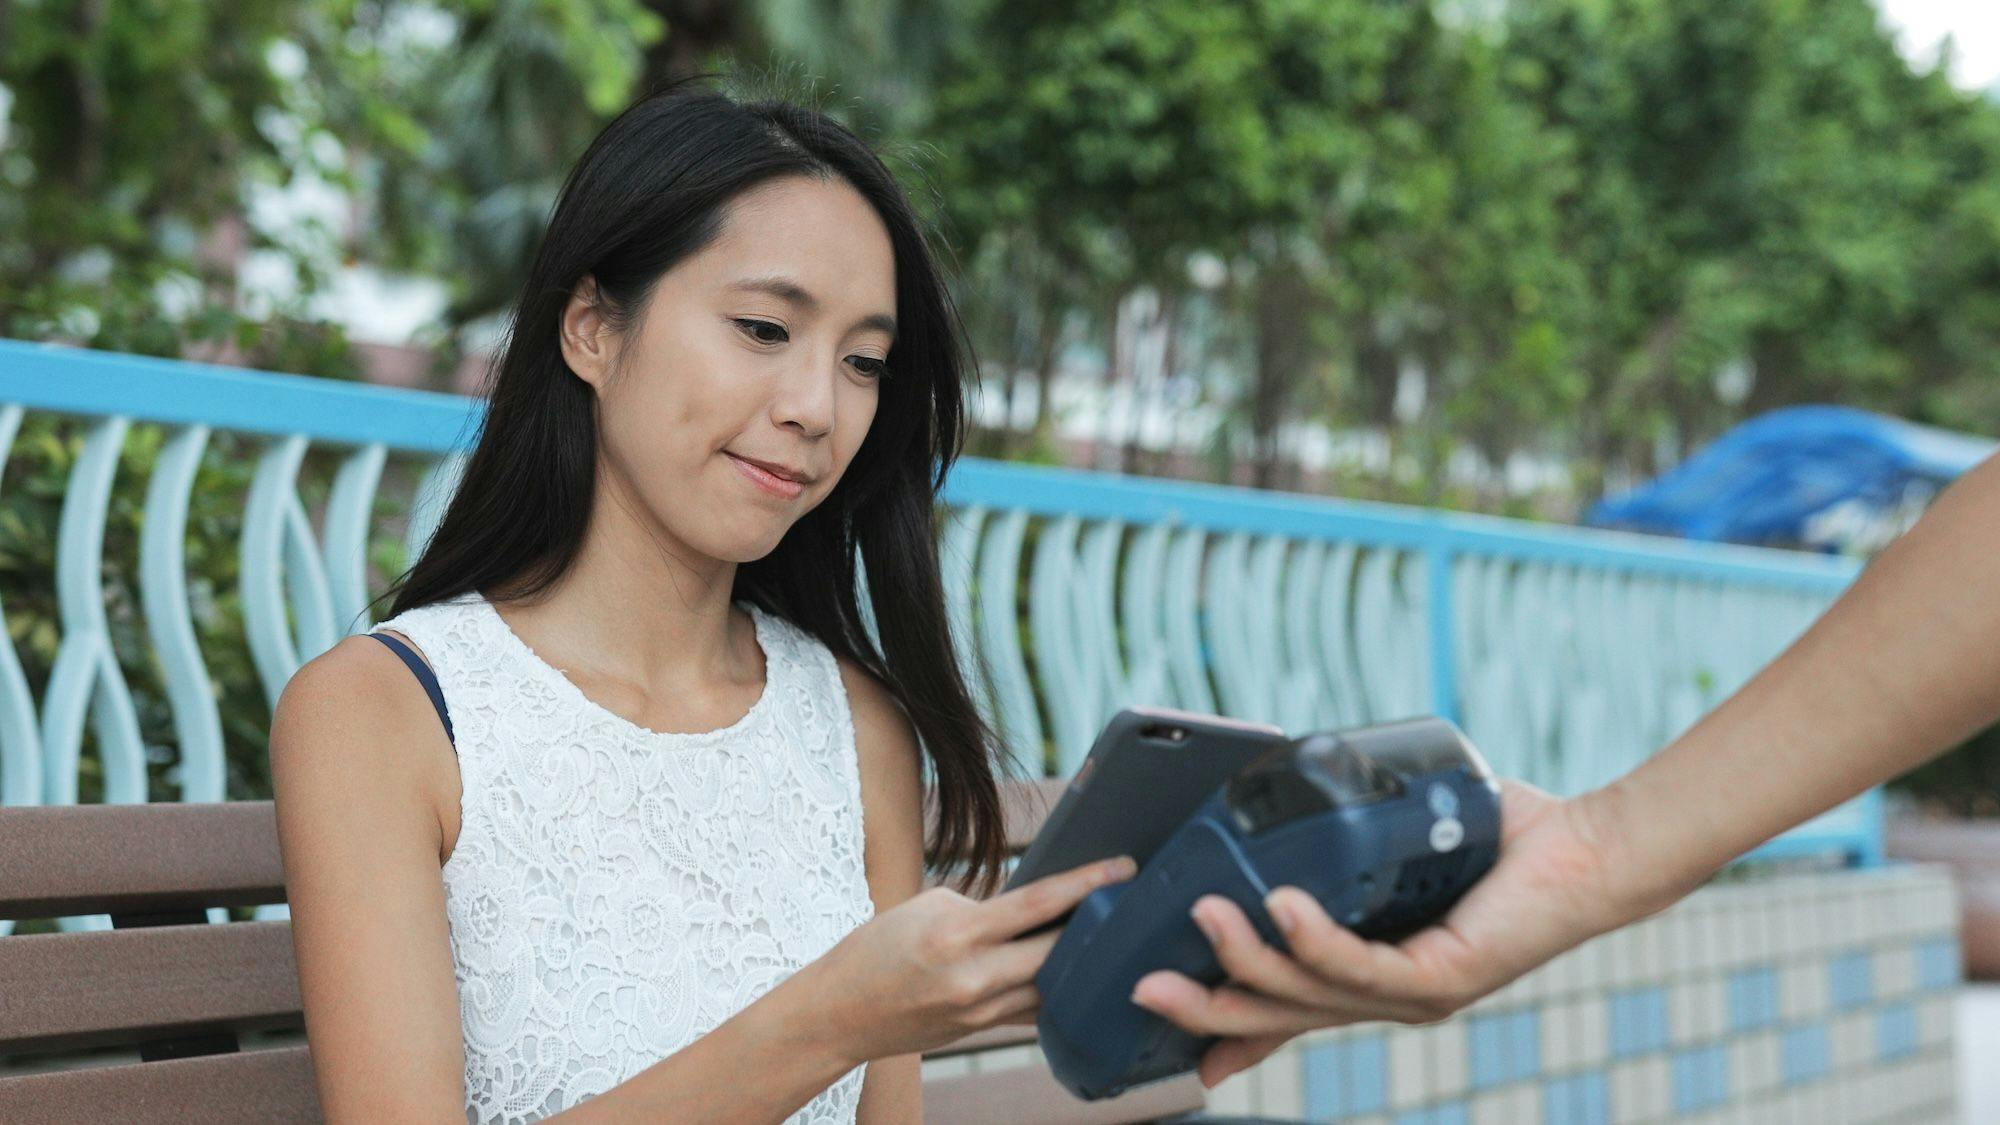 China News, Zahlungen, Bezahlen in China, Digitales Bezahlen, Zahlen, Zahlungsmittel: Frau benutzt Mobiltelefon zum Bezahlen